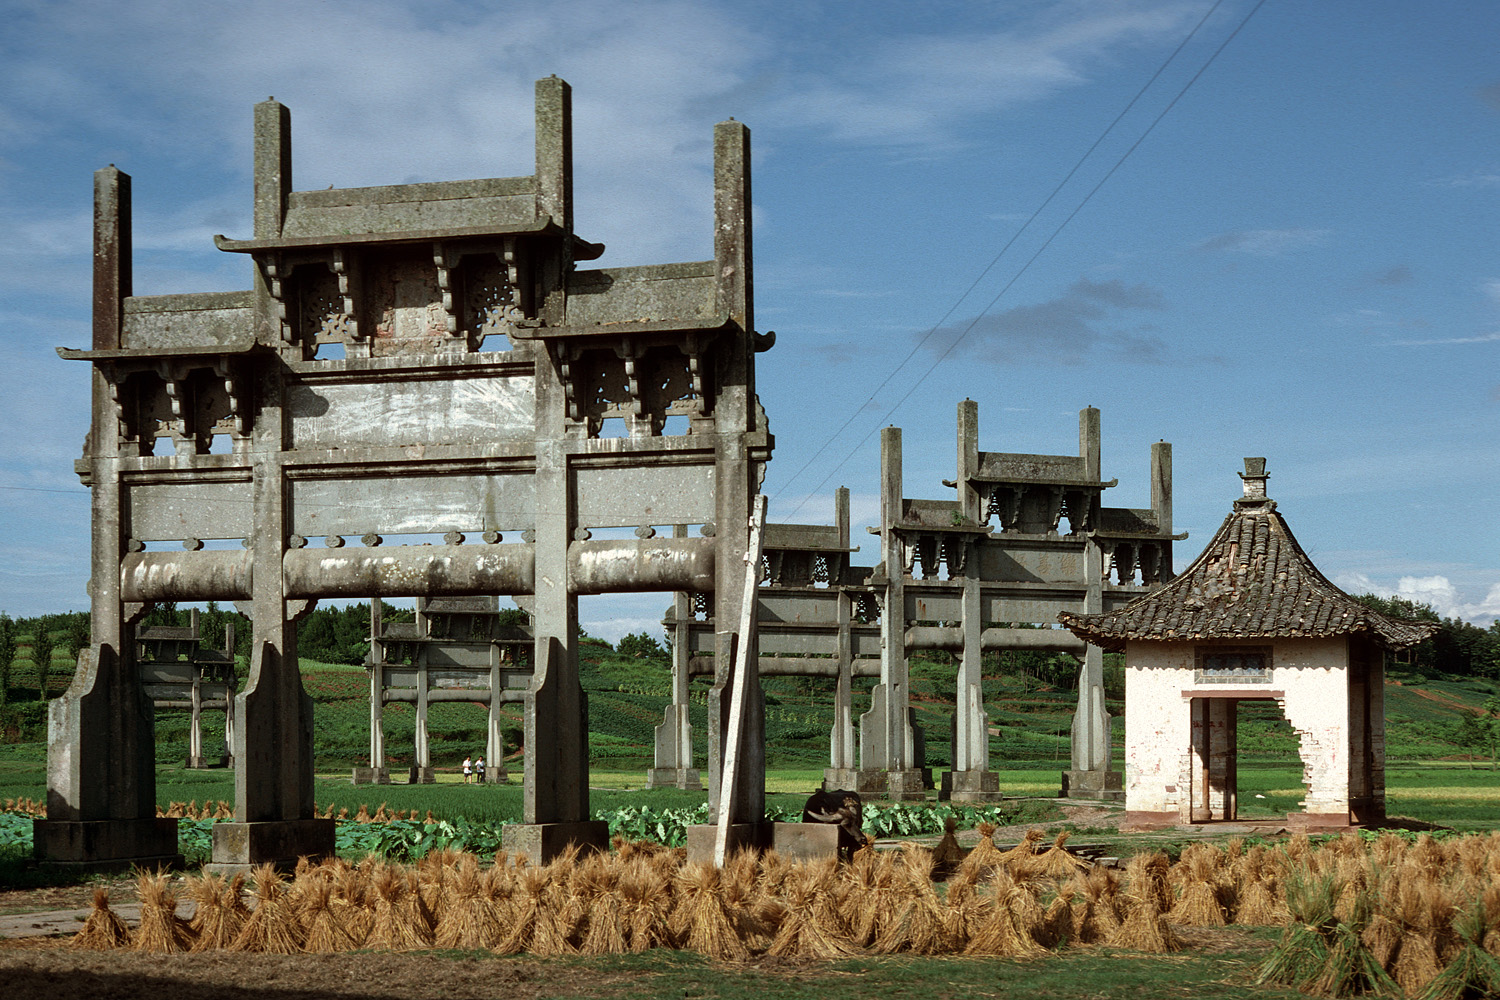 bill-hocker-gates-from-town-tangyue-anhui-china-1981